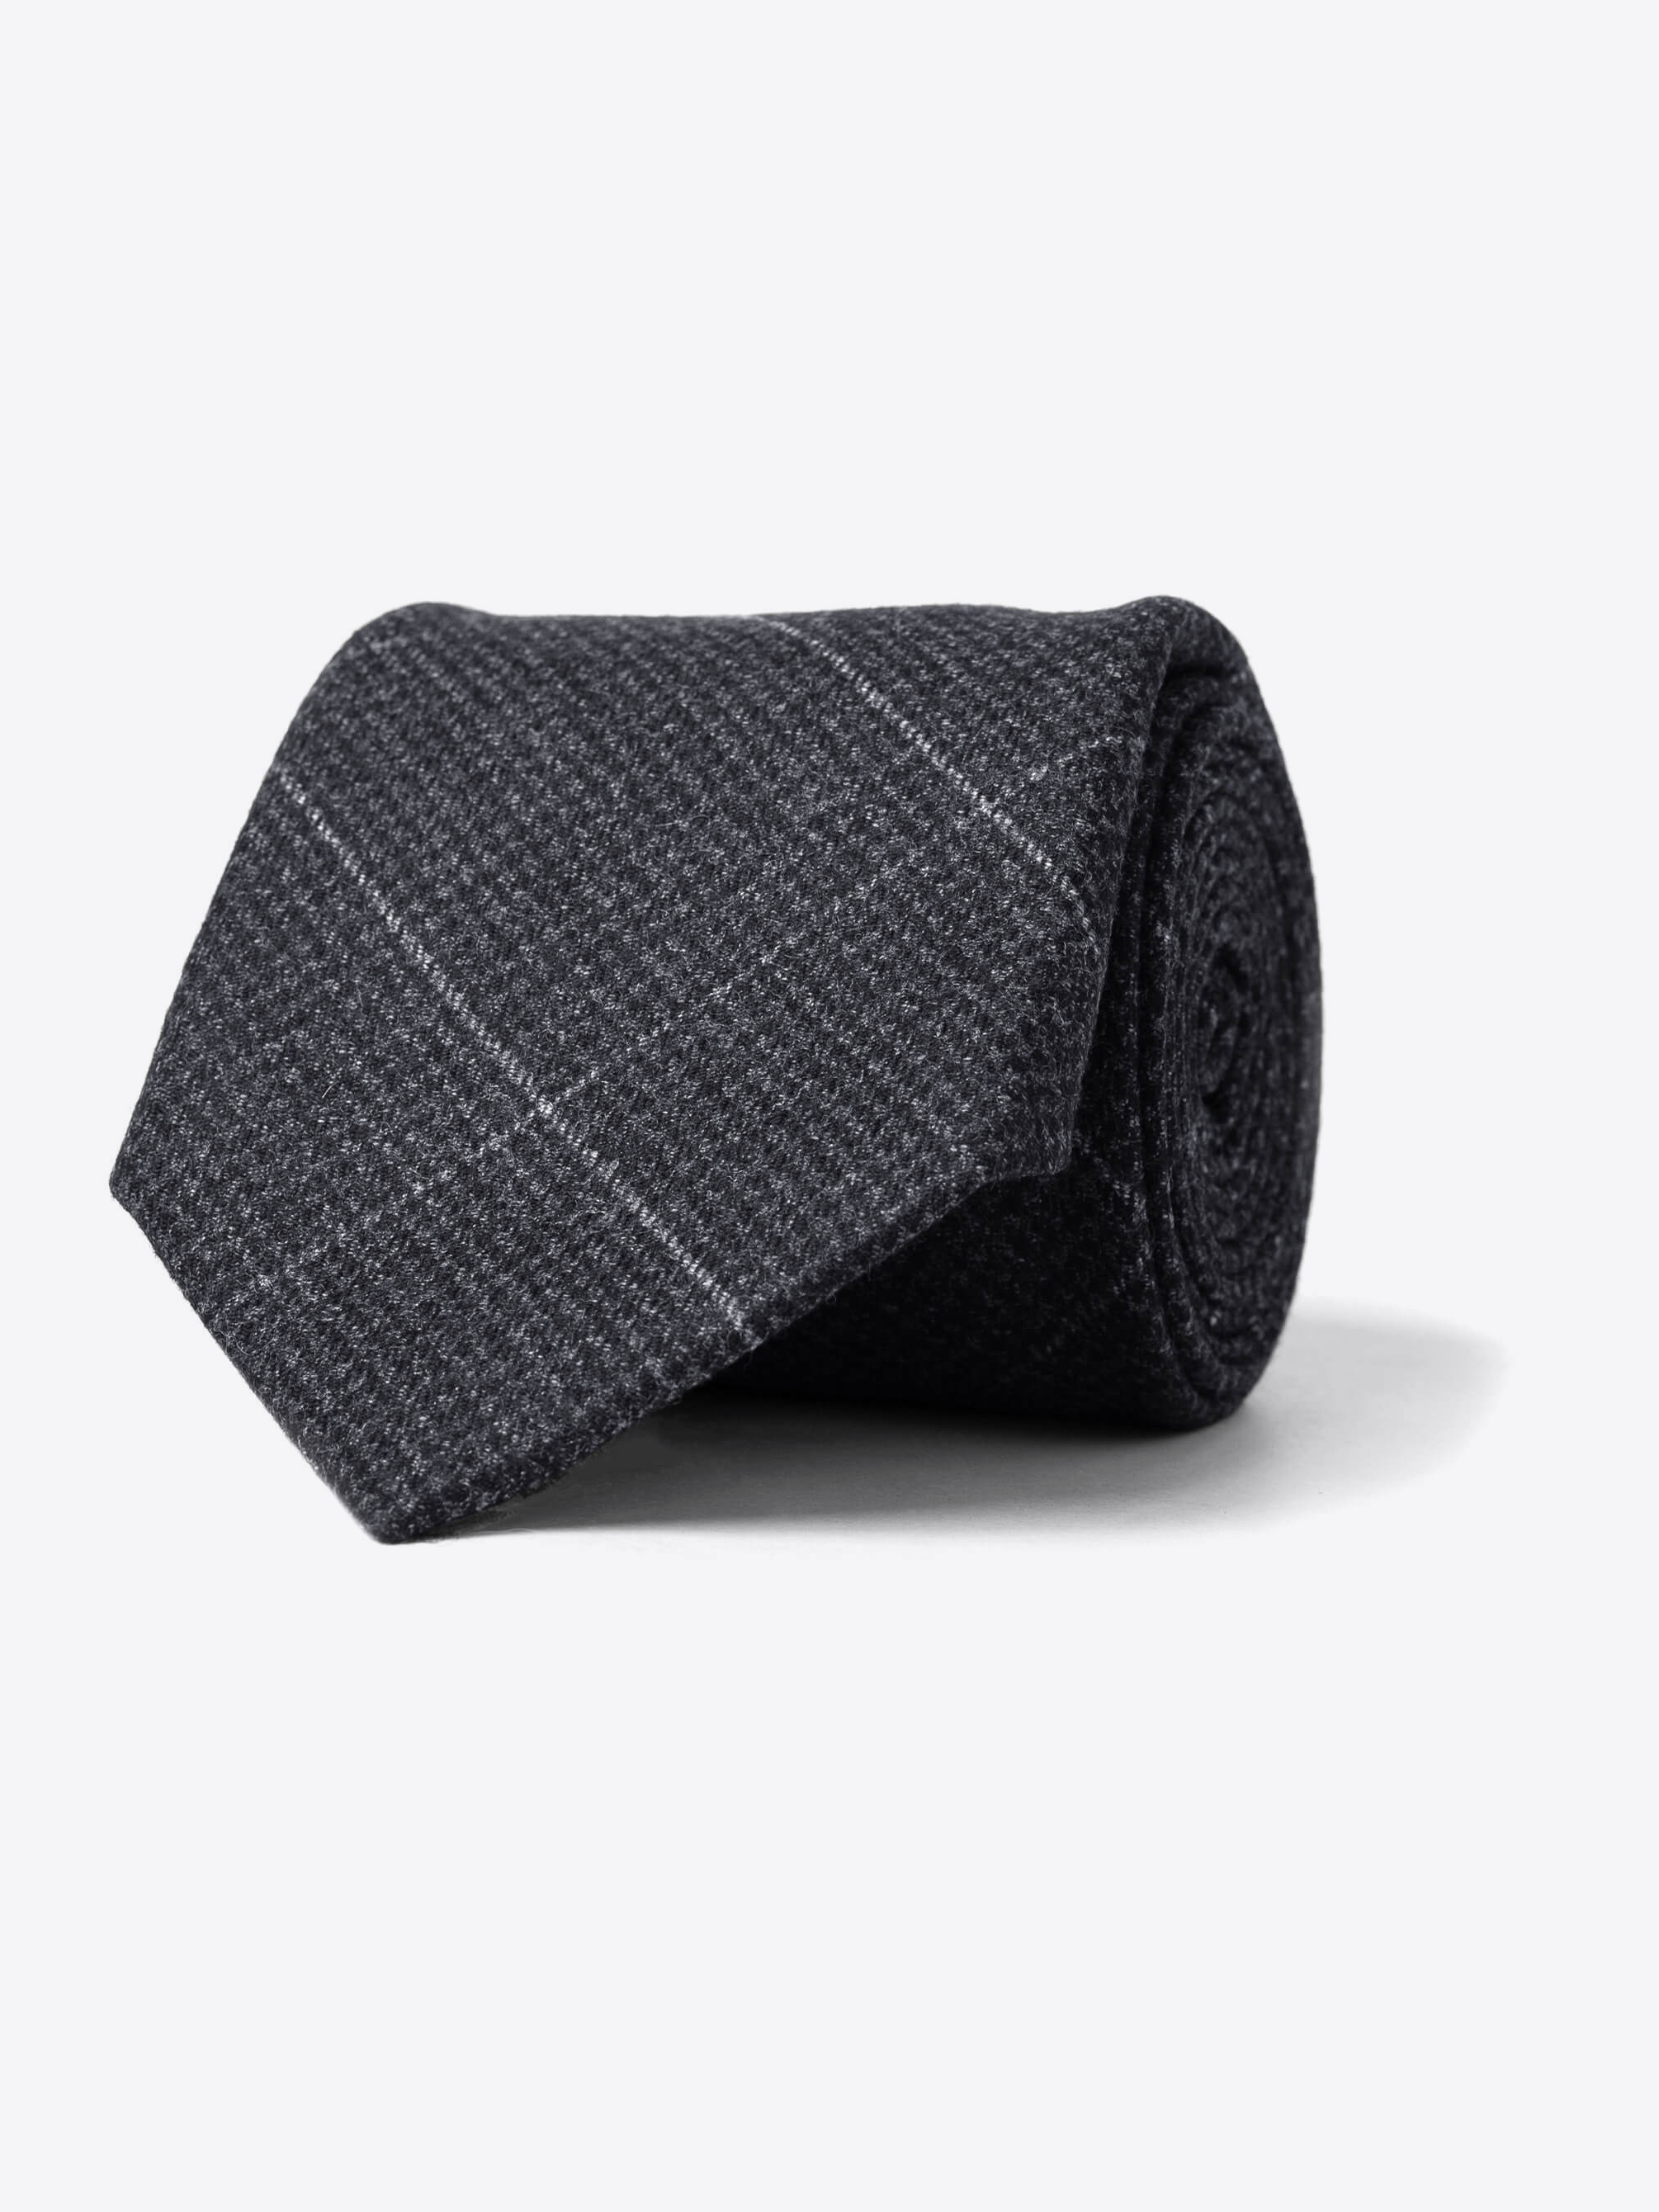 Zoom Image of Charcoal Windowpane Wool Tie